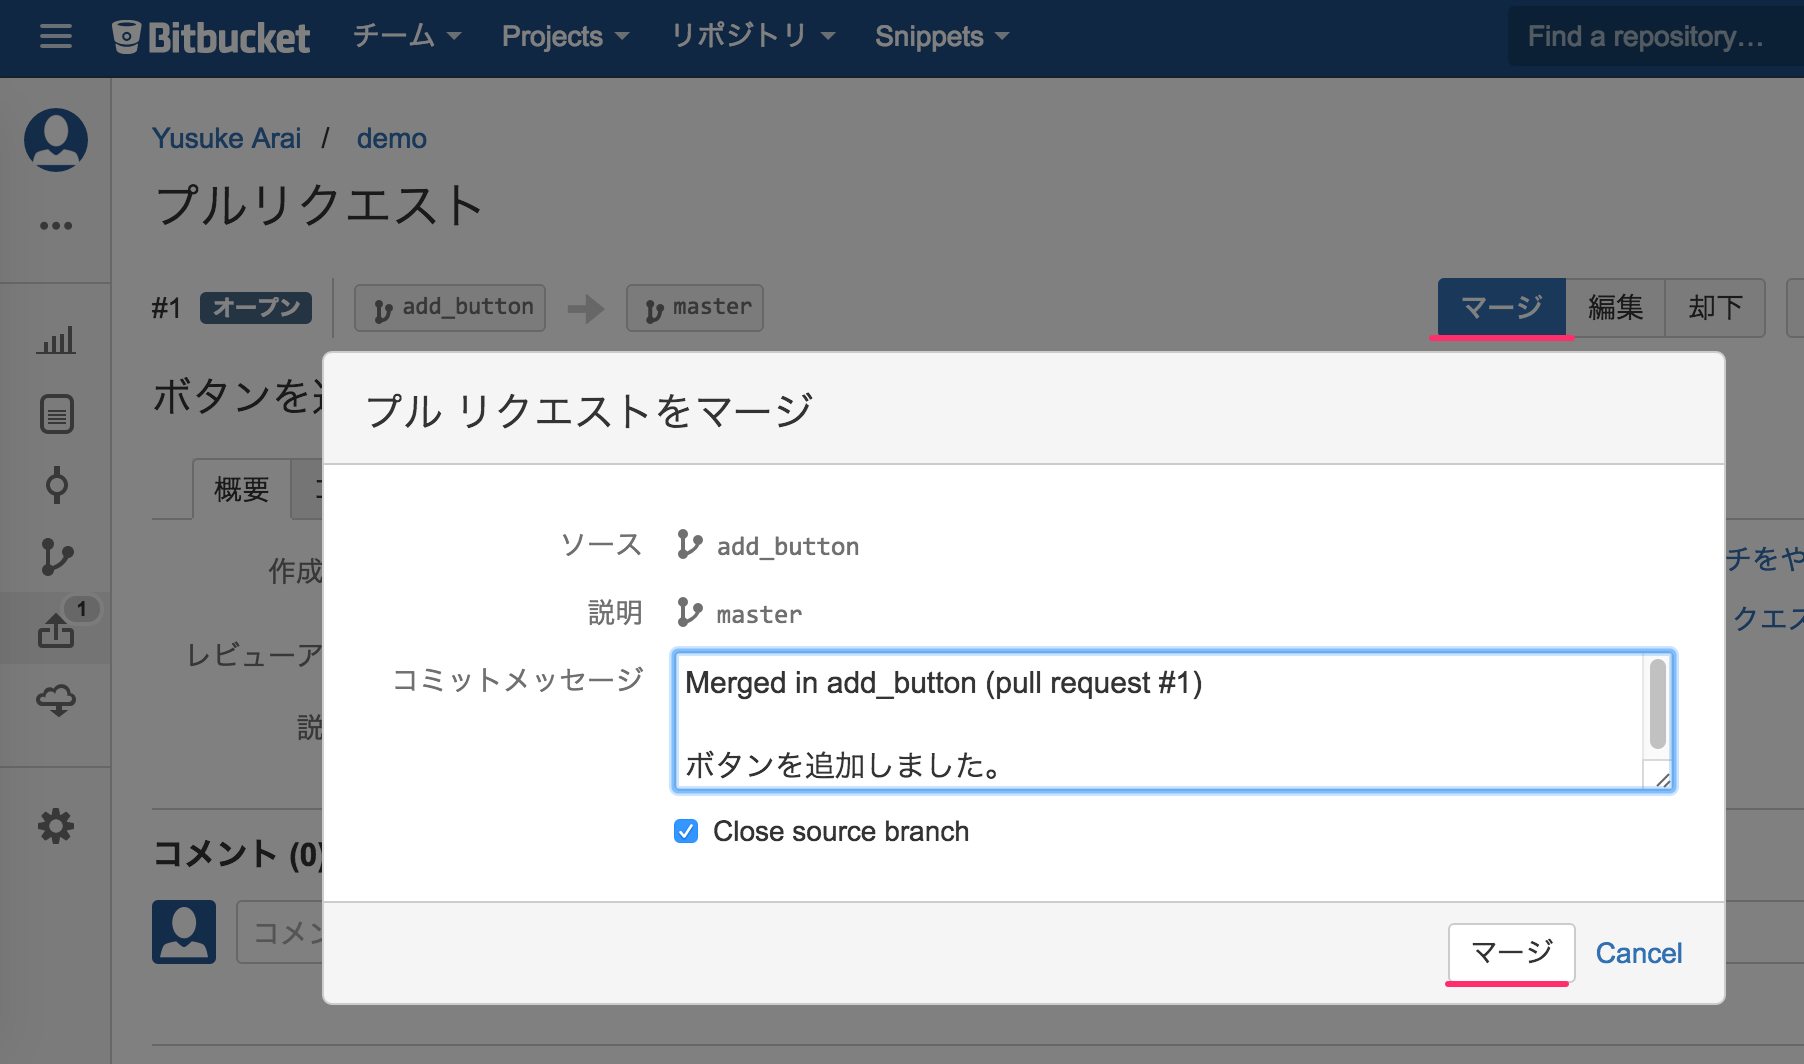 araiyusuke___demo___Pull_request__1__ボタンを追加しました。_—_Bitbucket.png